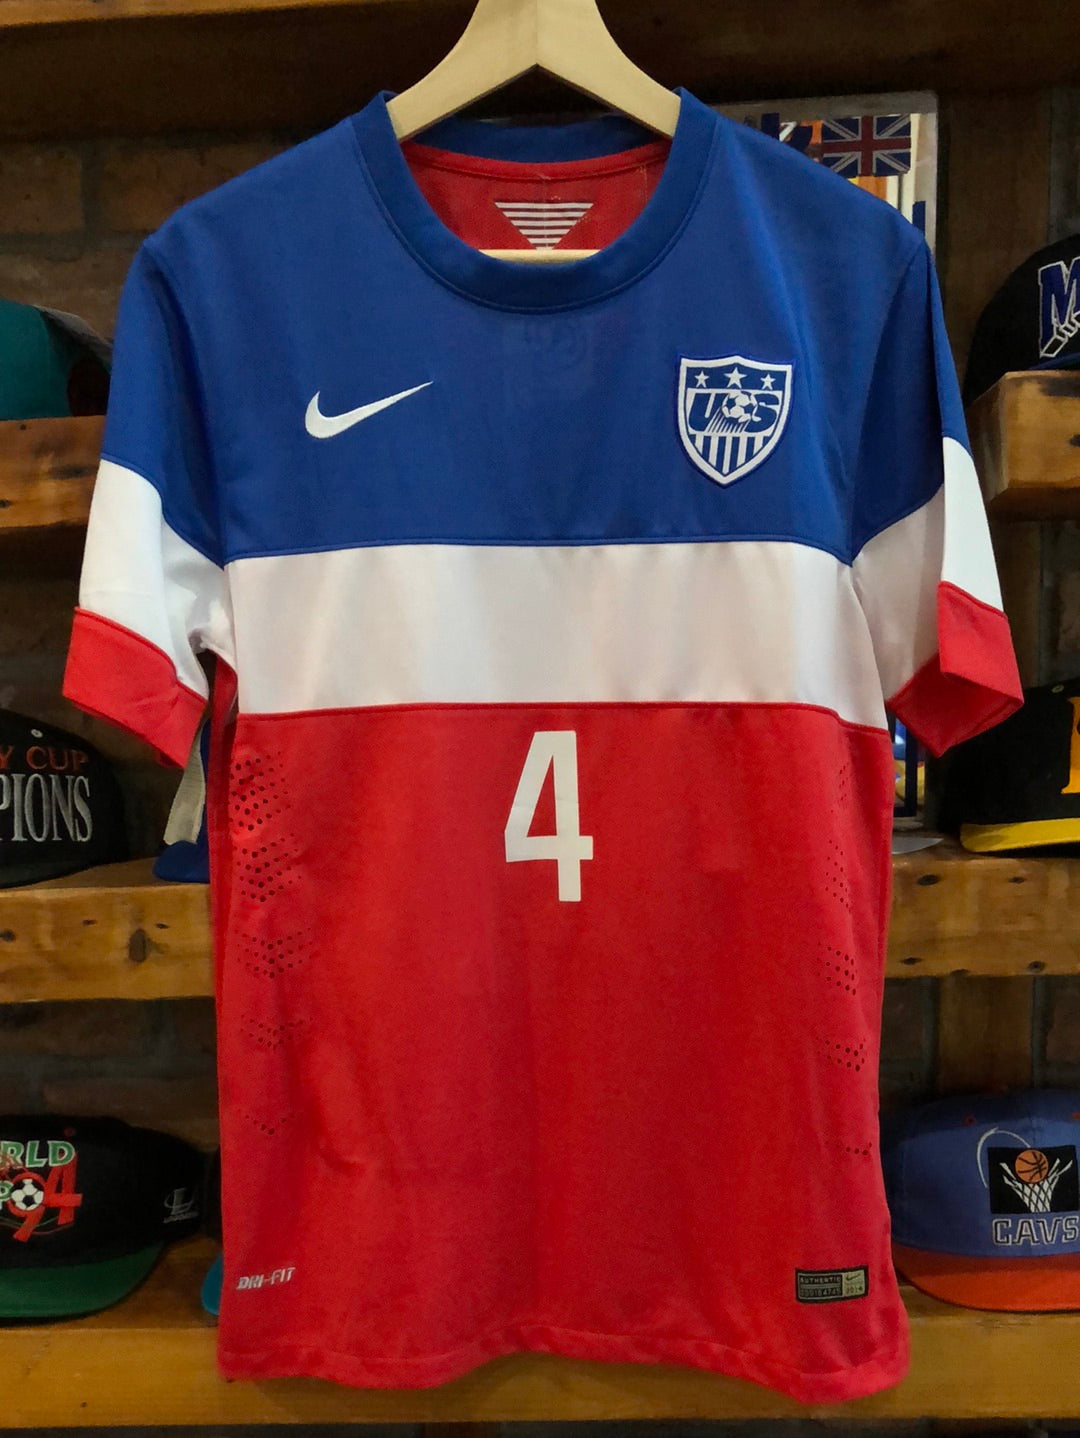 USA 2014 World Cup uniform